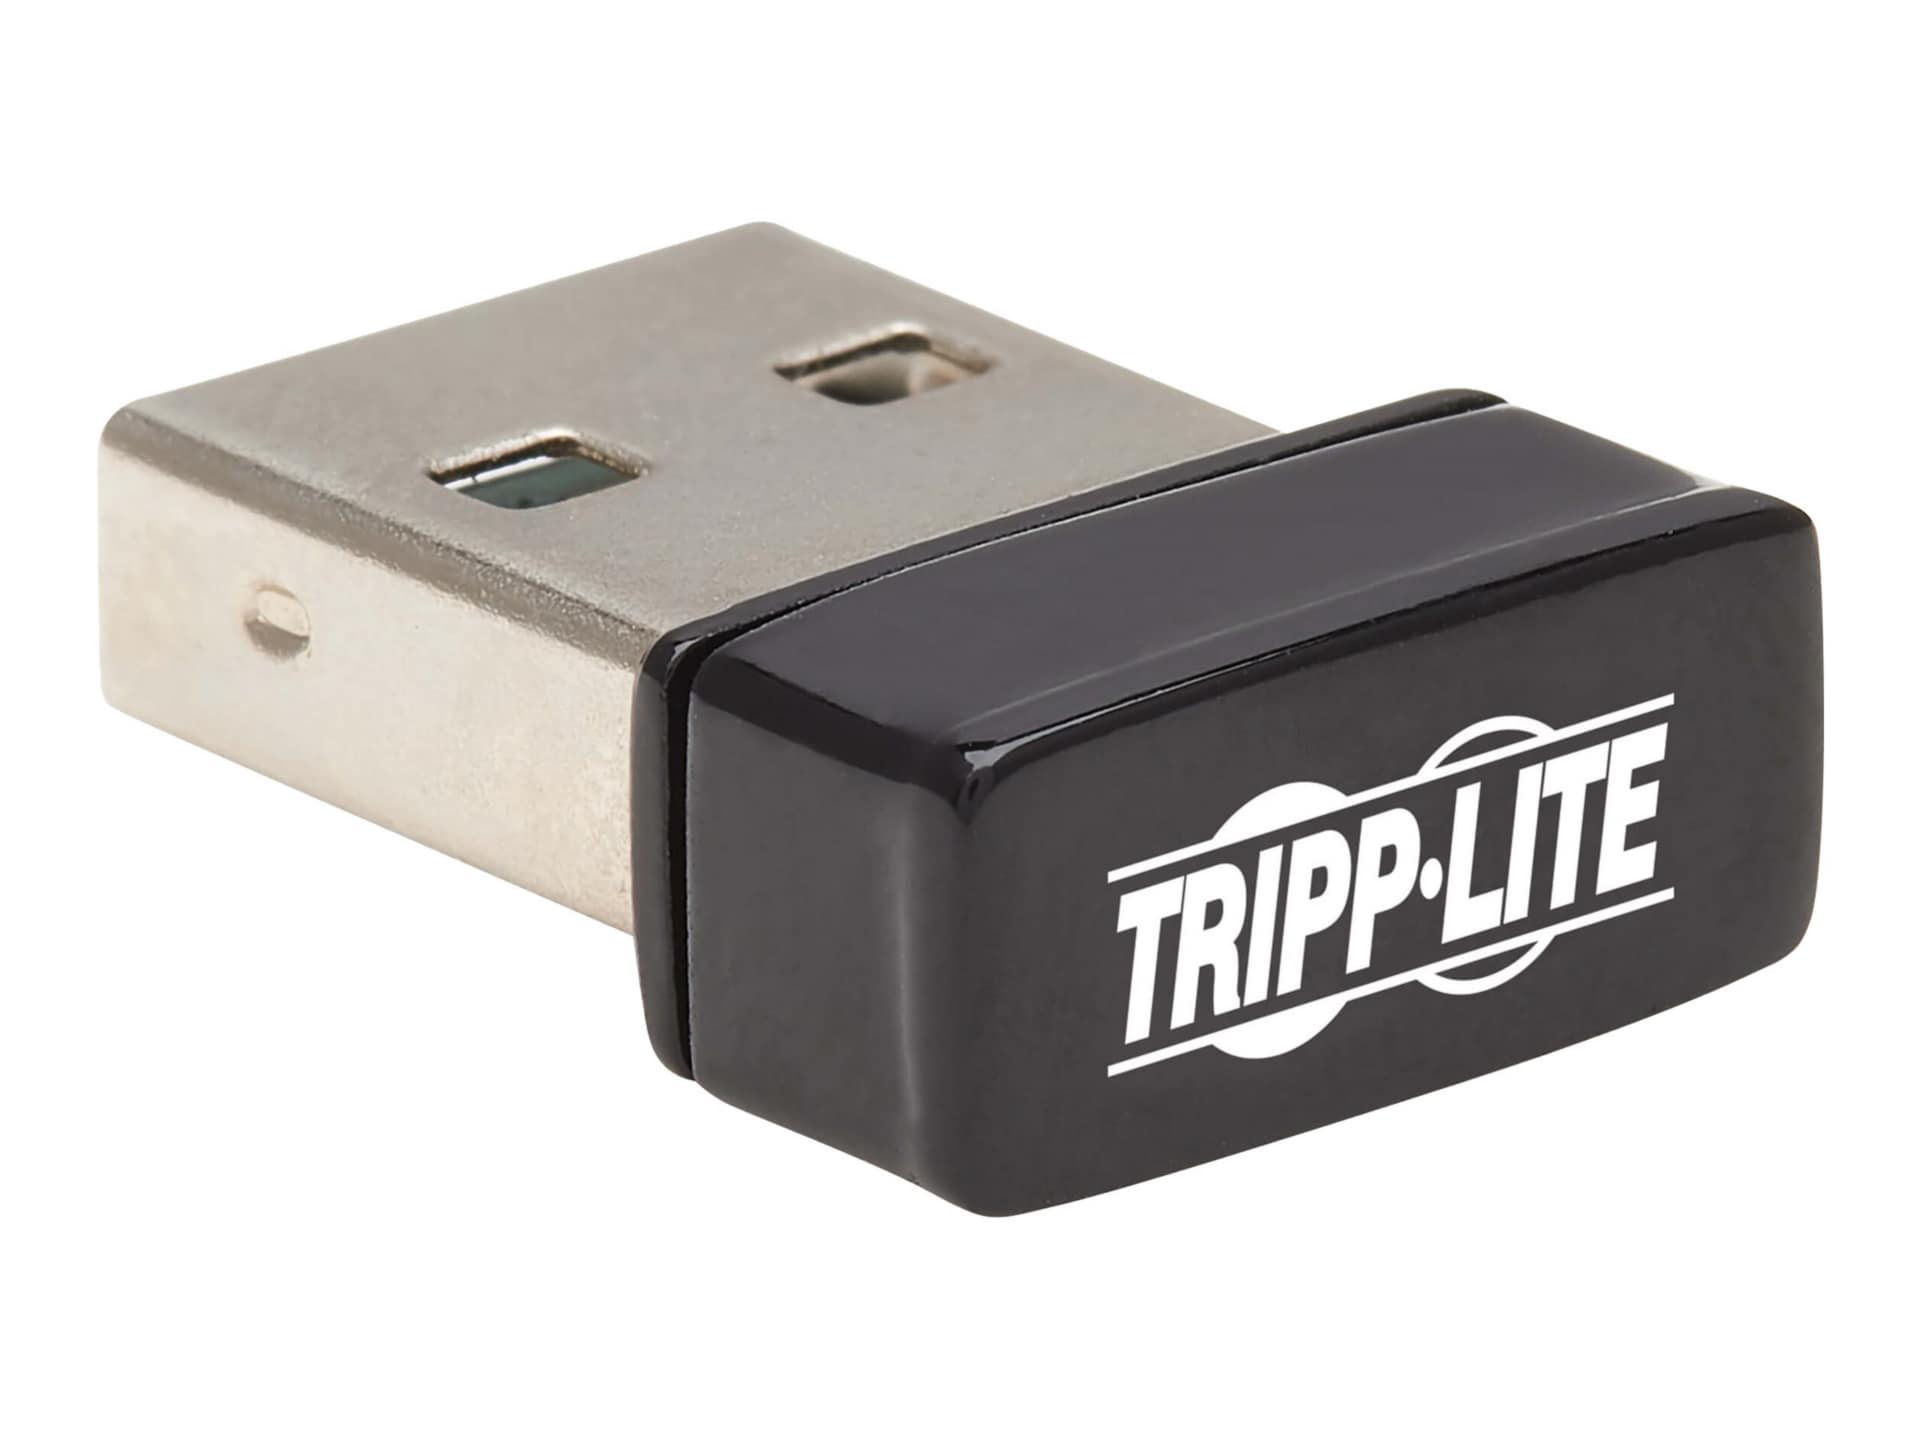 Tripp Lite USB 2.0 Wi-Fi Adapter, AC600 2.4Ghz/5Ghz Dual Band, 1T1R, 802.11ac - network adapter - USB 2.0